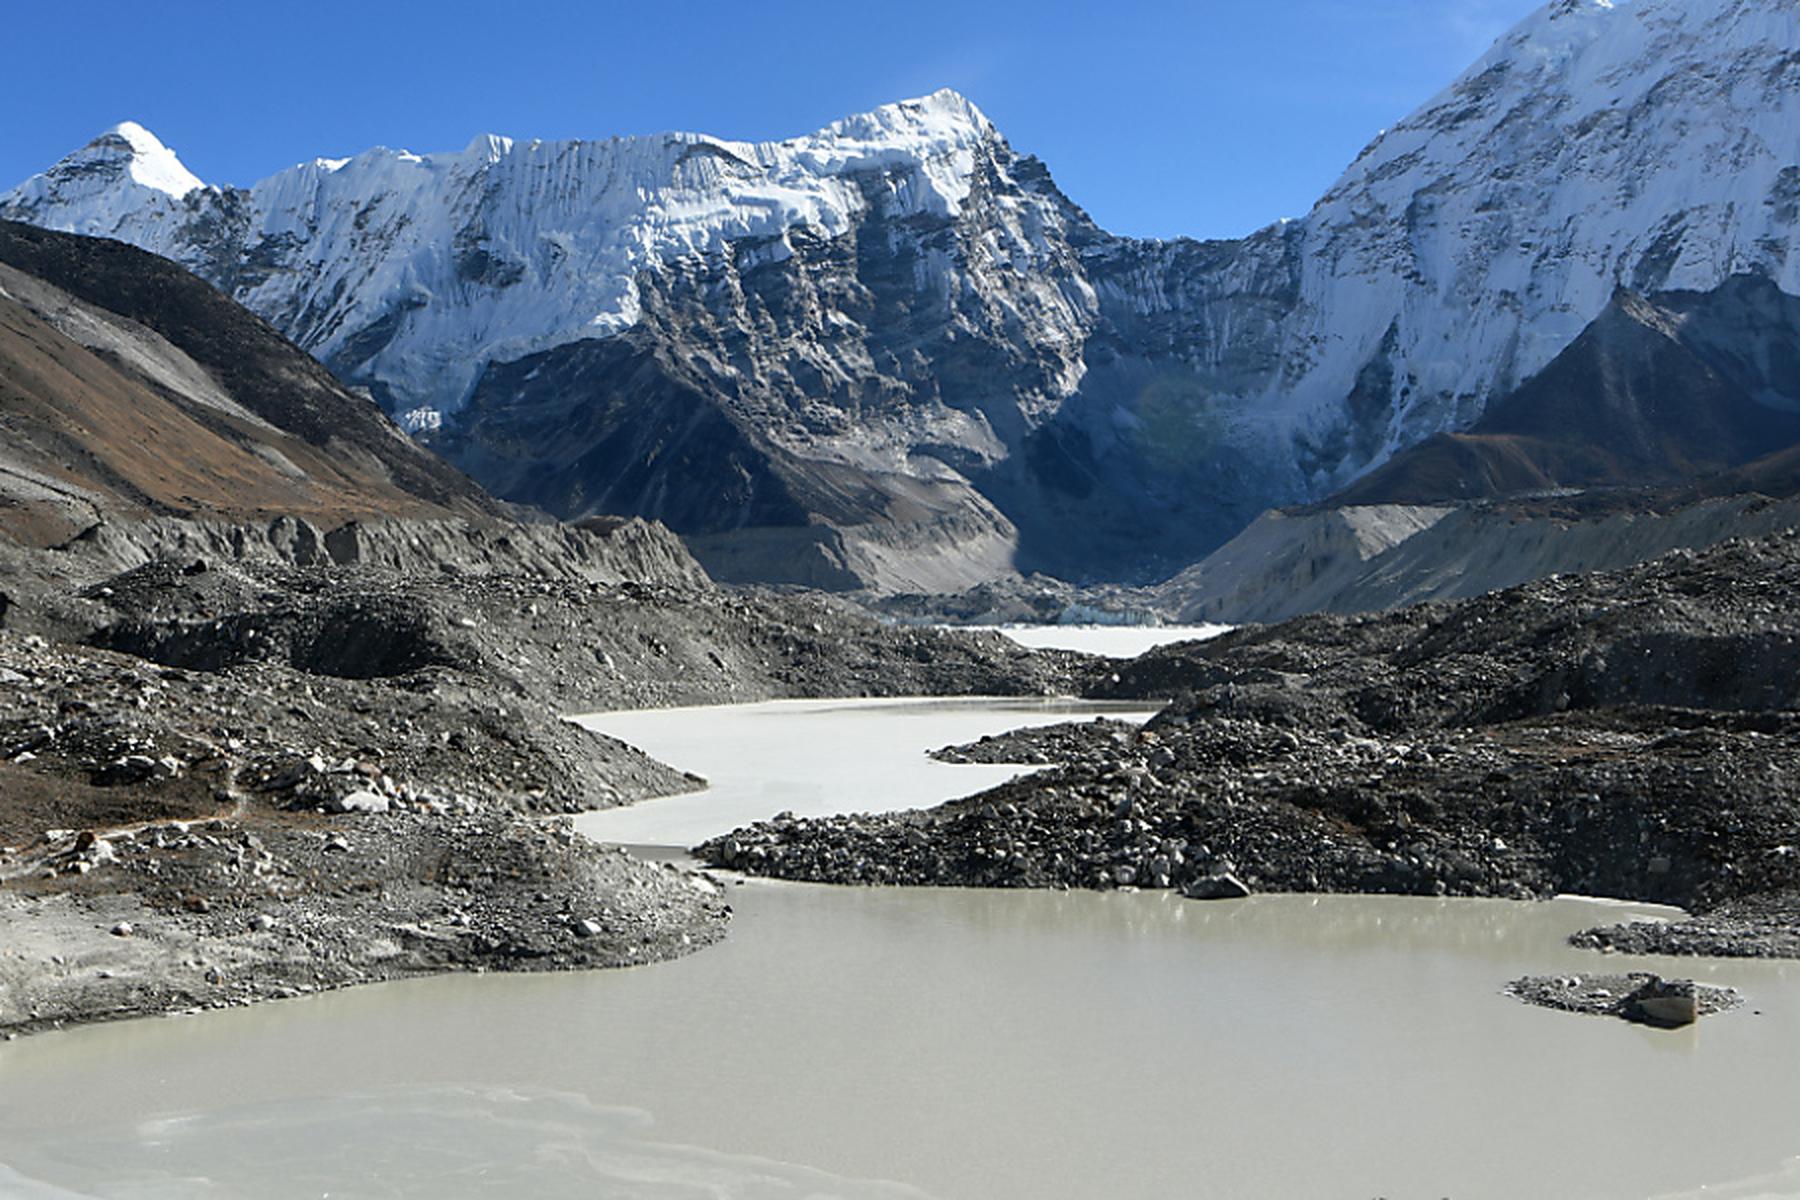 Kathmandu: Schneemangel im Himalaya bedroht Trinkwasserversorgung